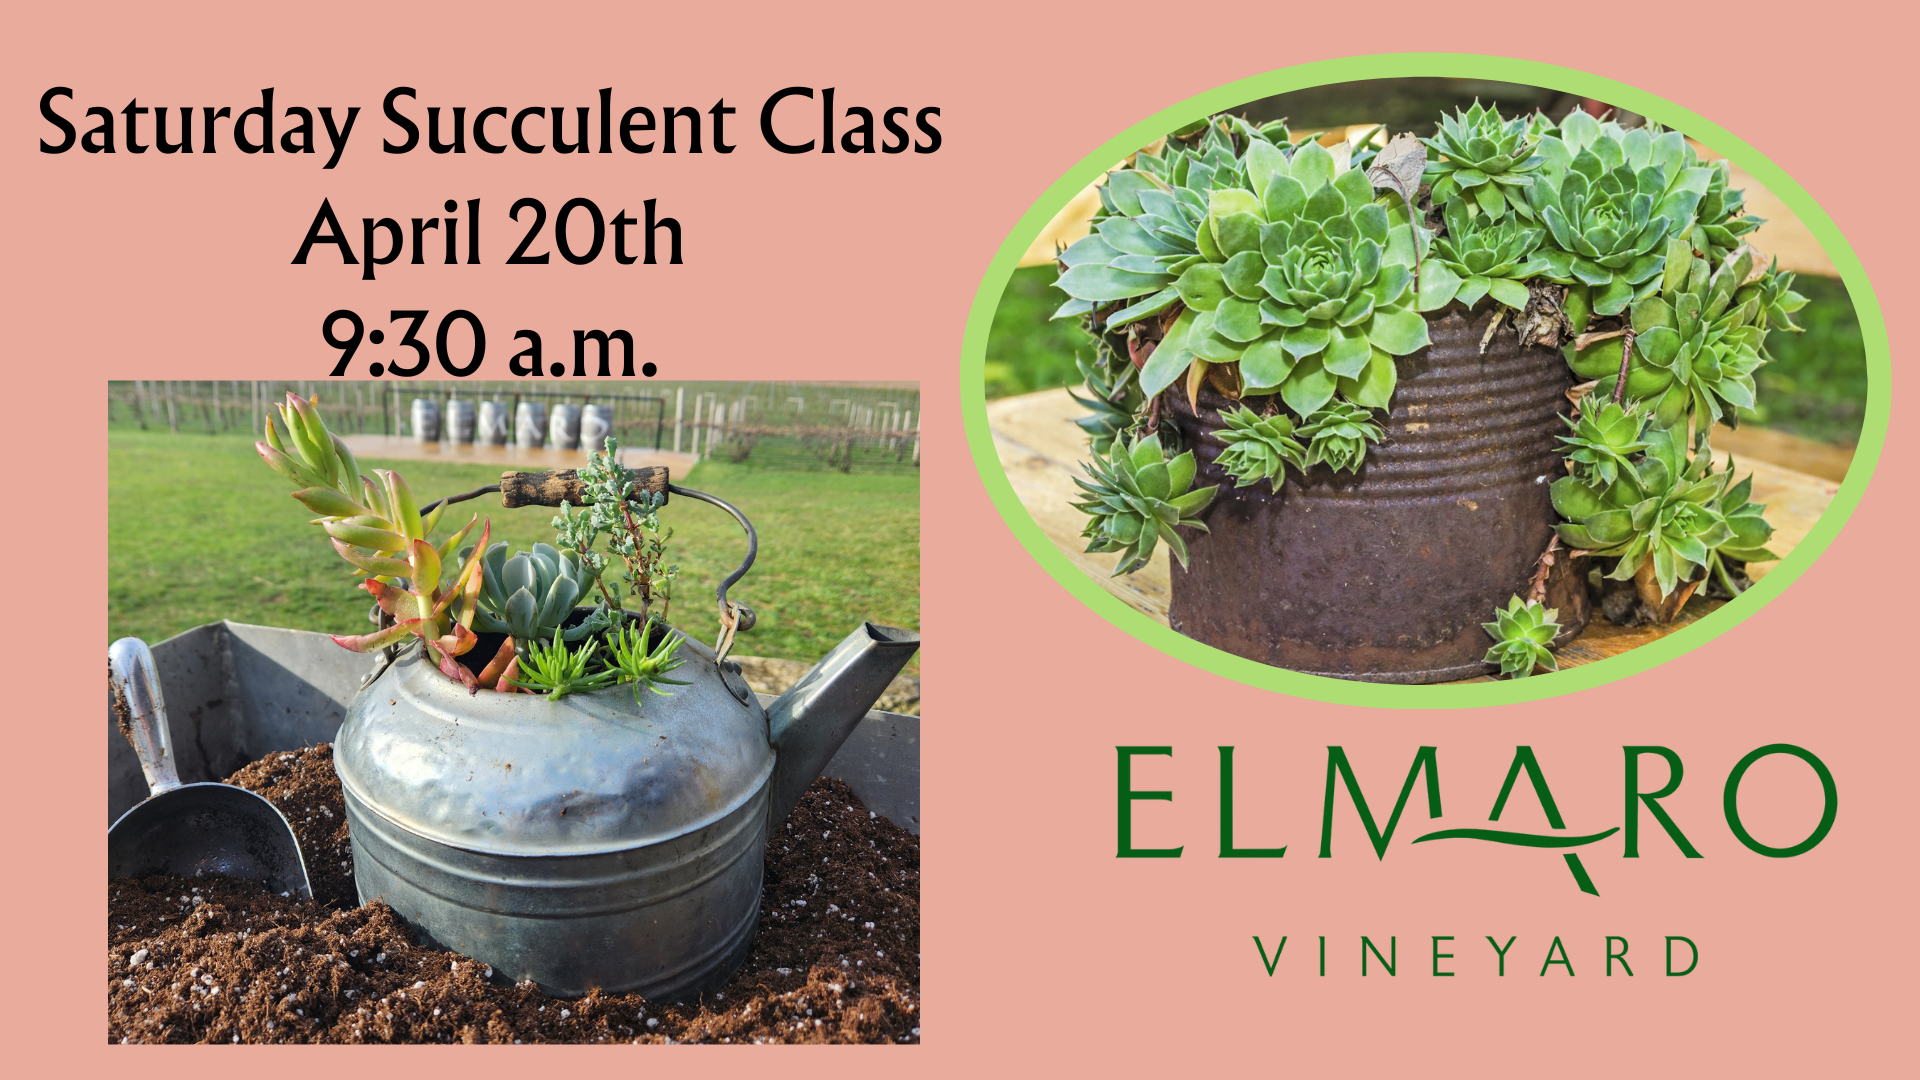 Friday Succulent Class April 19th 630 p.m. (6)